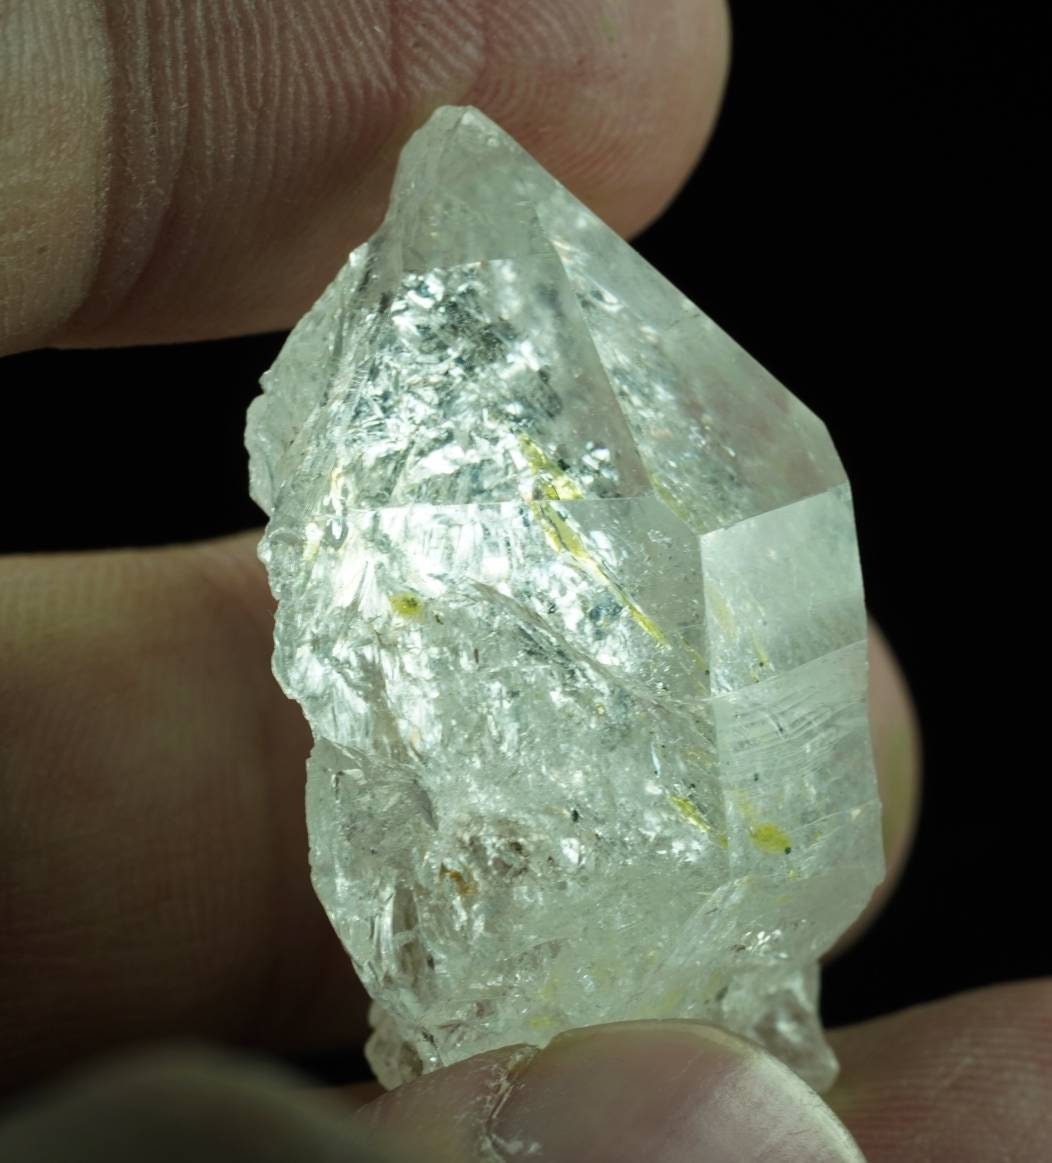 ARSAA GEMS AND MINERALSAesthetic fine quality beautiful UV reactive petroleum quartz crystal from Balochistan Pakistan, weight 15.9 grams - Premium  from ARSAA GEMS AND MINERALS - Just $75.00! Shop now at ARSAA GEMS AND MINERALS